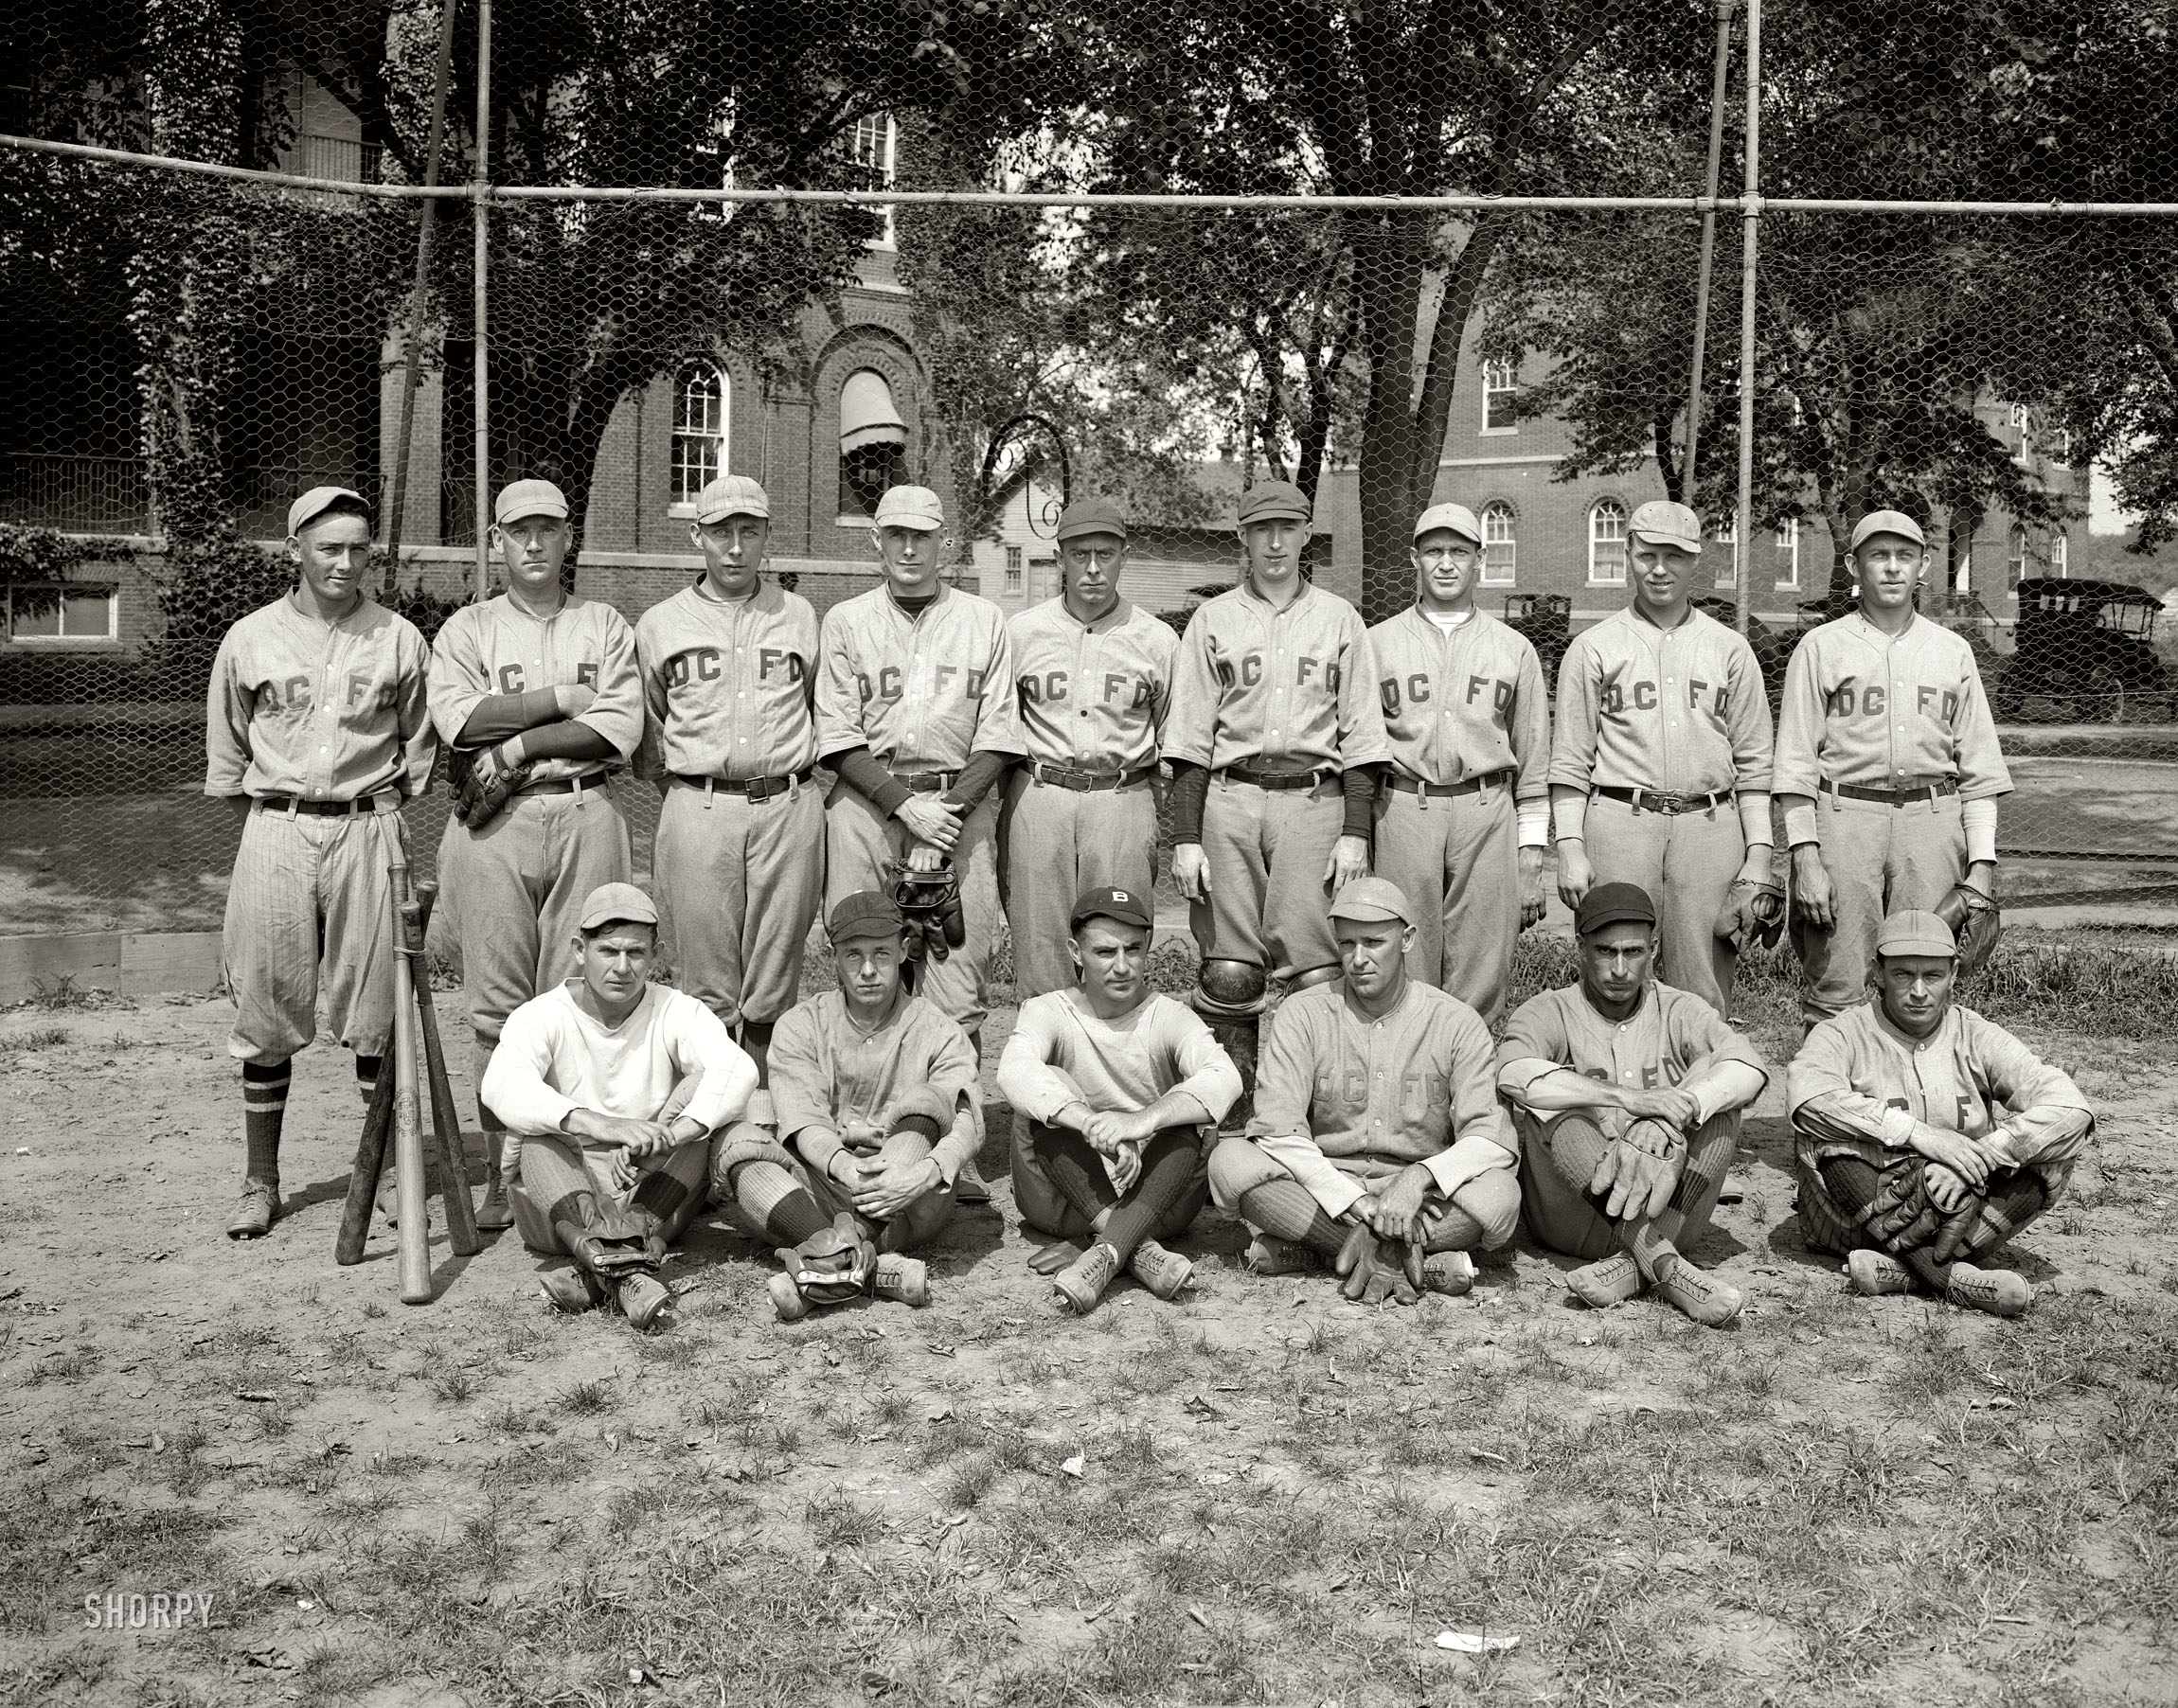 Washington, D.C., 1923. "D.C. Fire Department baseball team." National Photo Company glass negative. View full size.